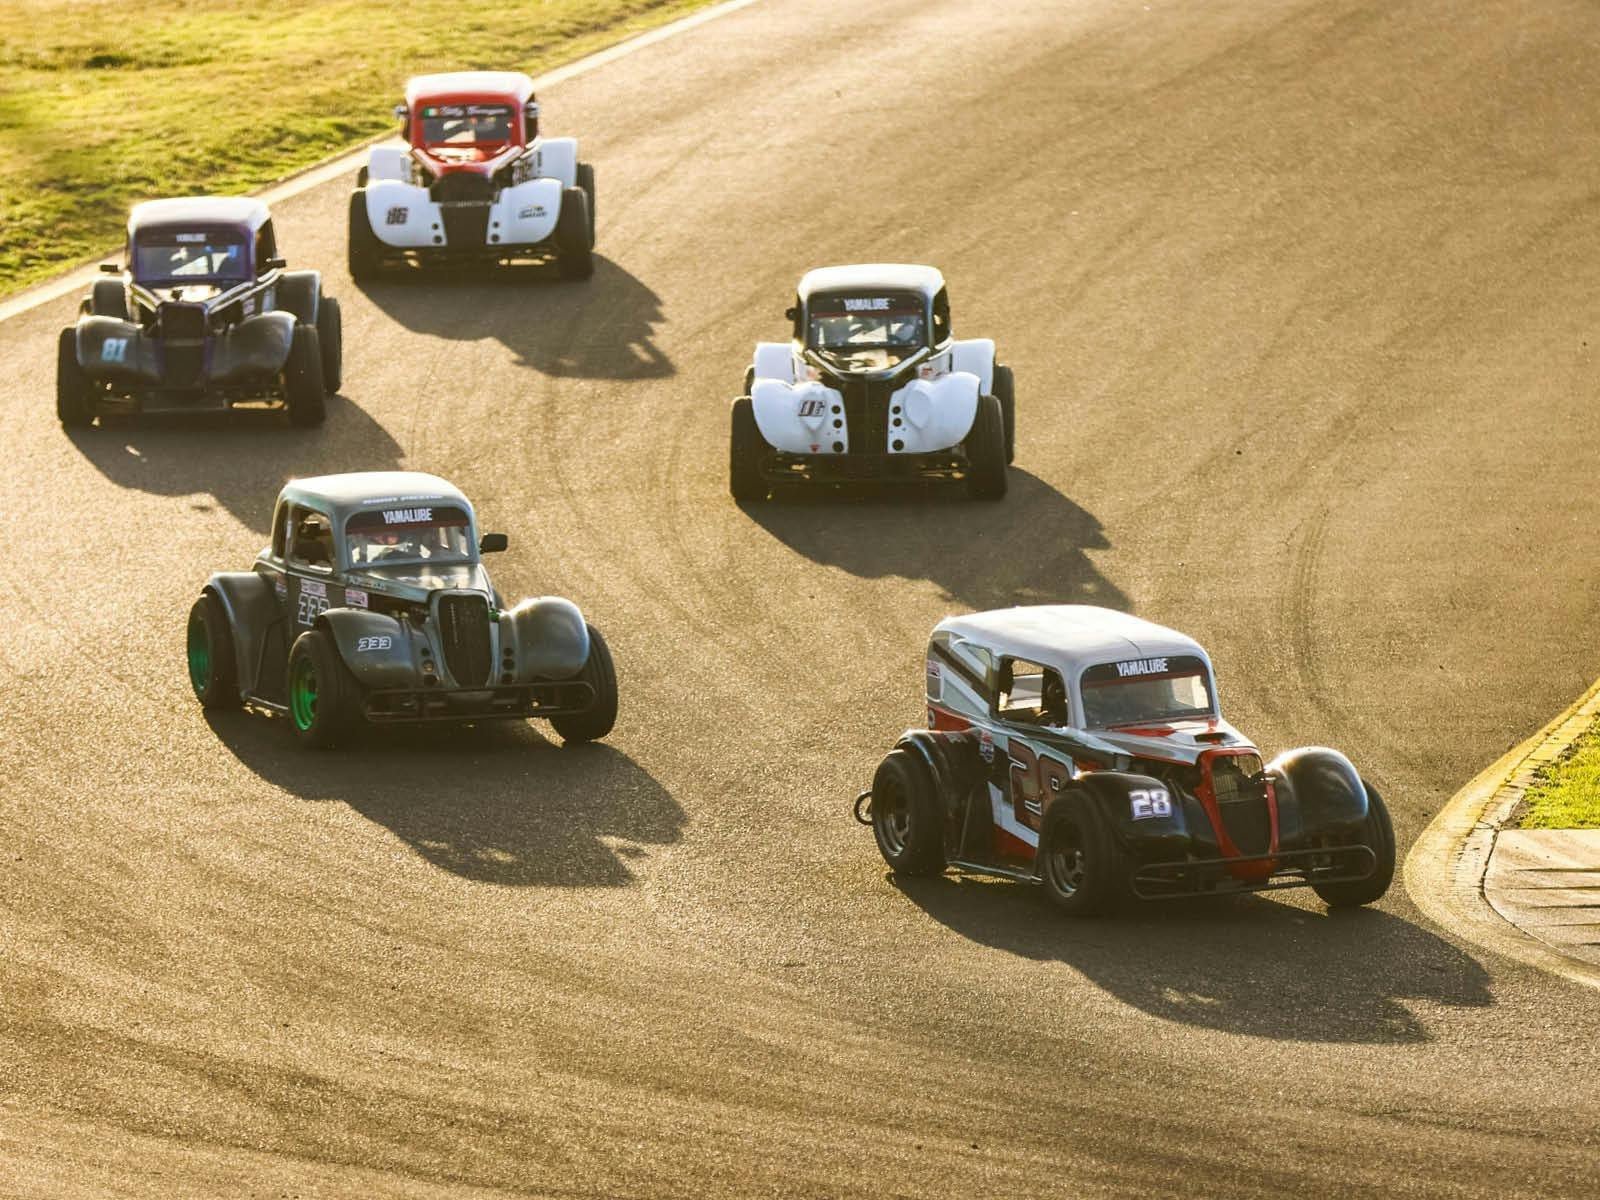 Five legend cars racing around a corner on a racetrack